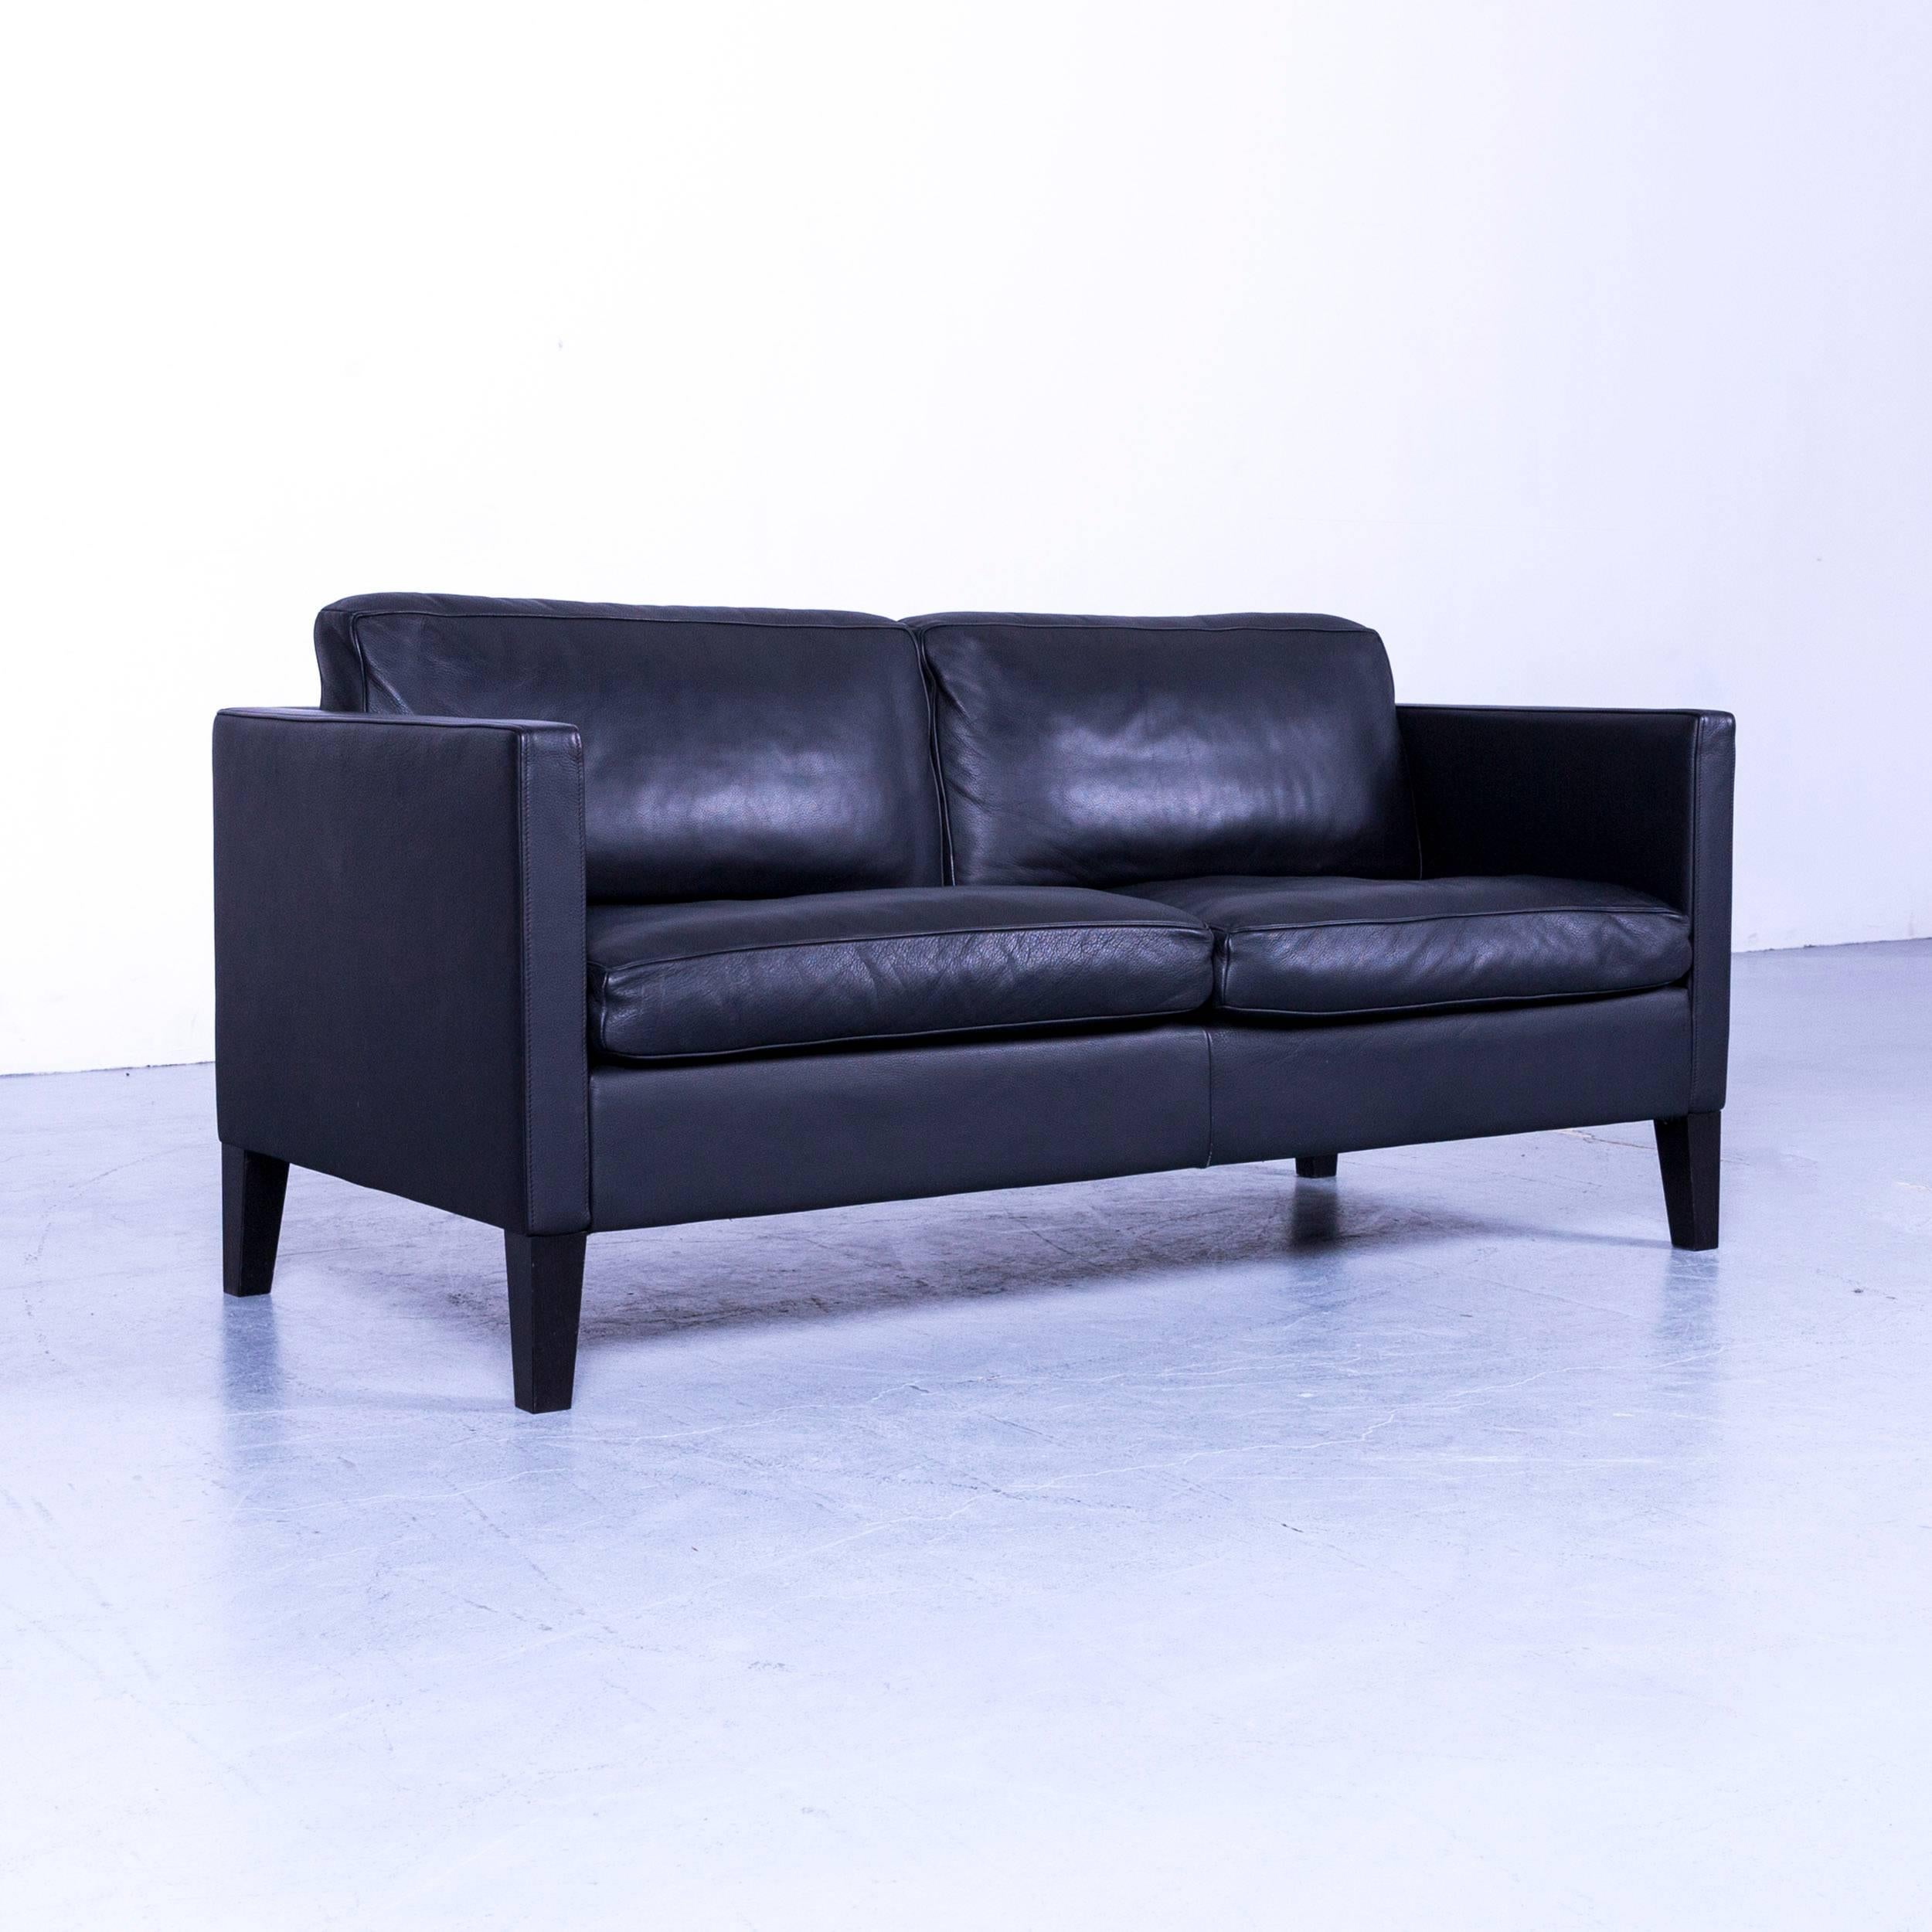 Black colored original De Sede designer leather sofa in a minimalistic and modern design, made for pure comfort and flexibility.